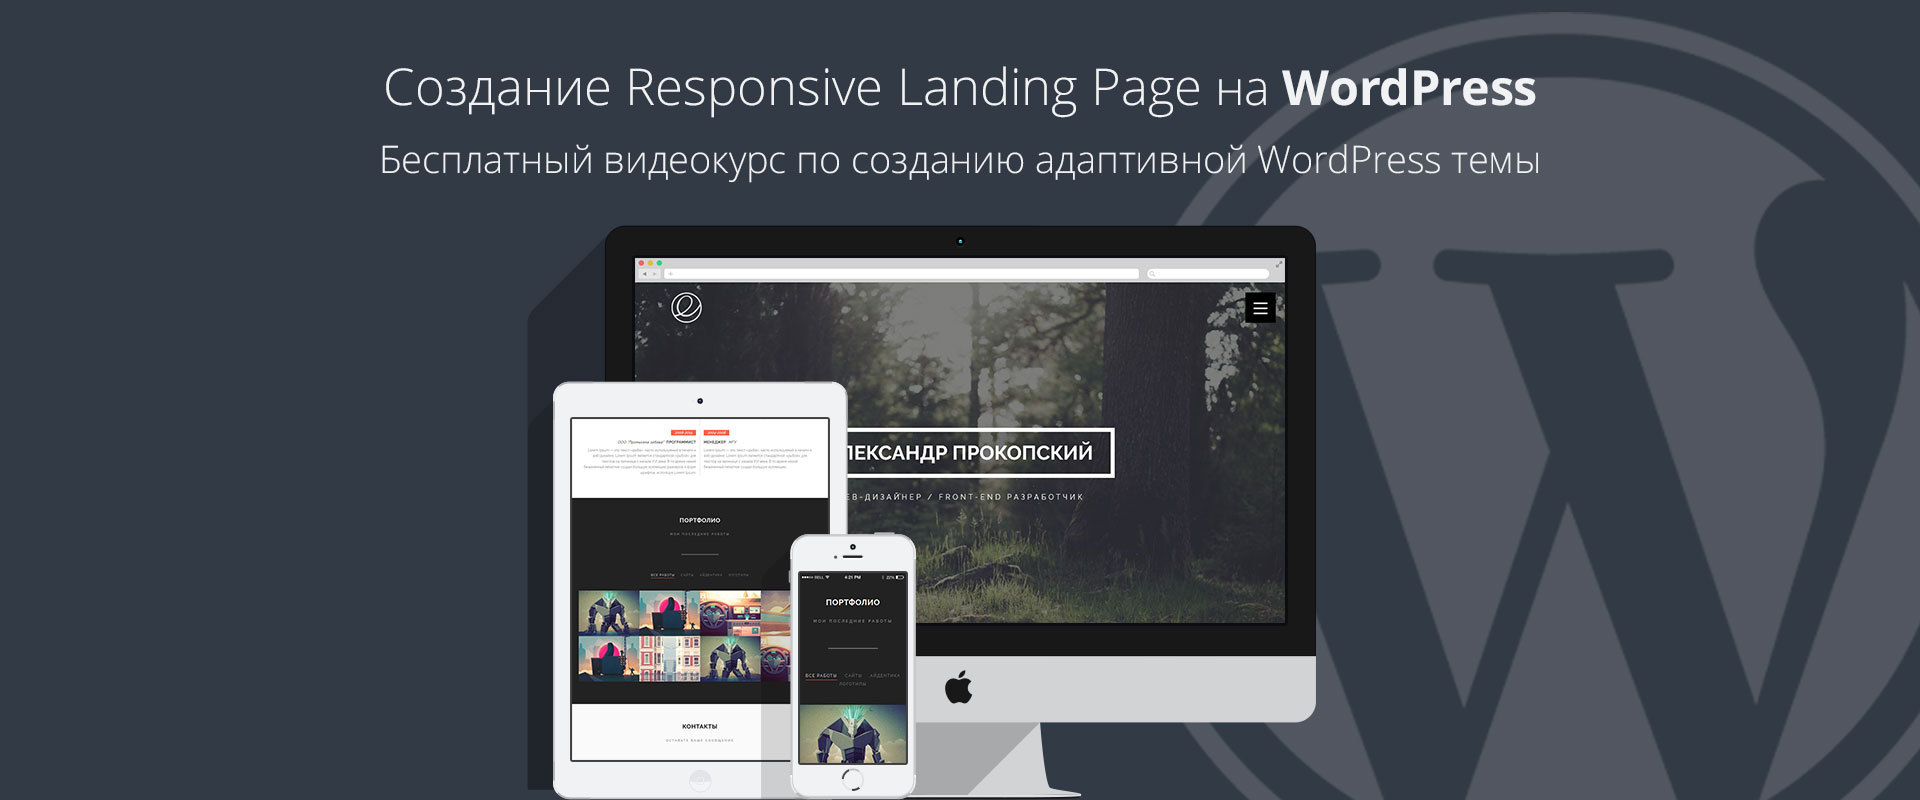 Создание Responsive Landing Page на WordPress от А до Я - 1